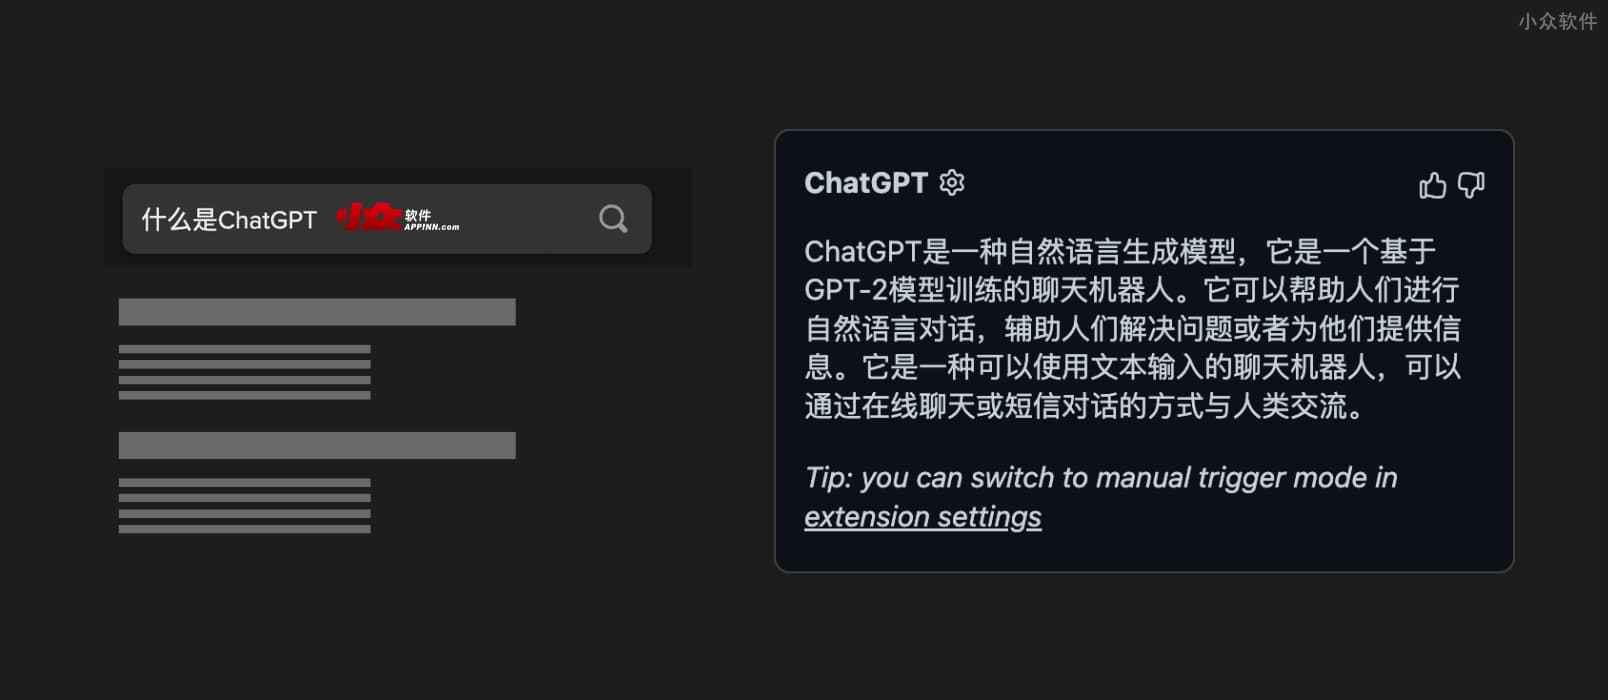 ChatGPT for Google - 在 10 大搜索引擎结果旁边显示 ChatGPT 结果，支持 Google、百度、Bing、DuckDuckGo 等[Chrome/Firefox]